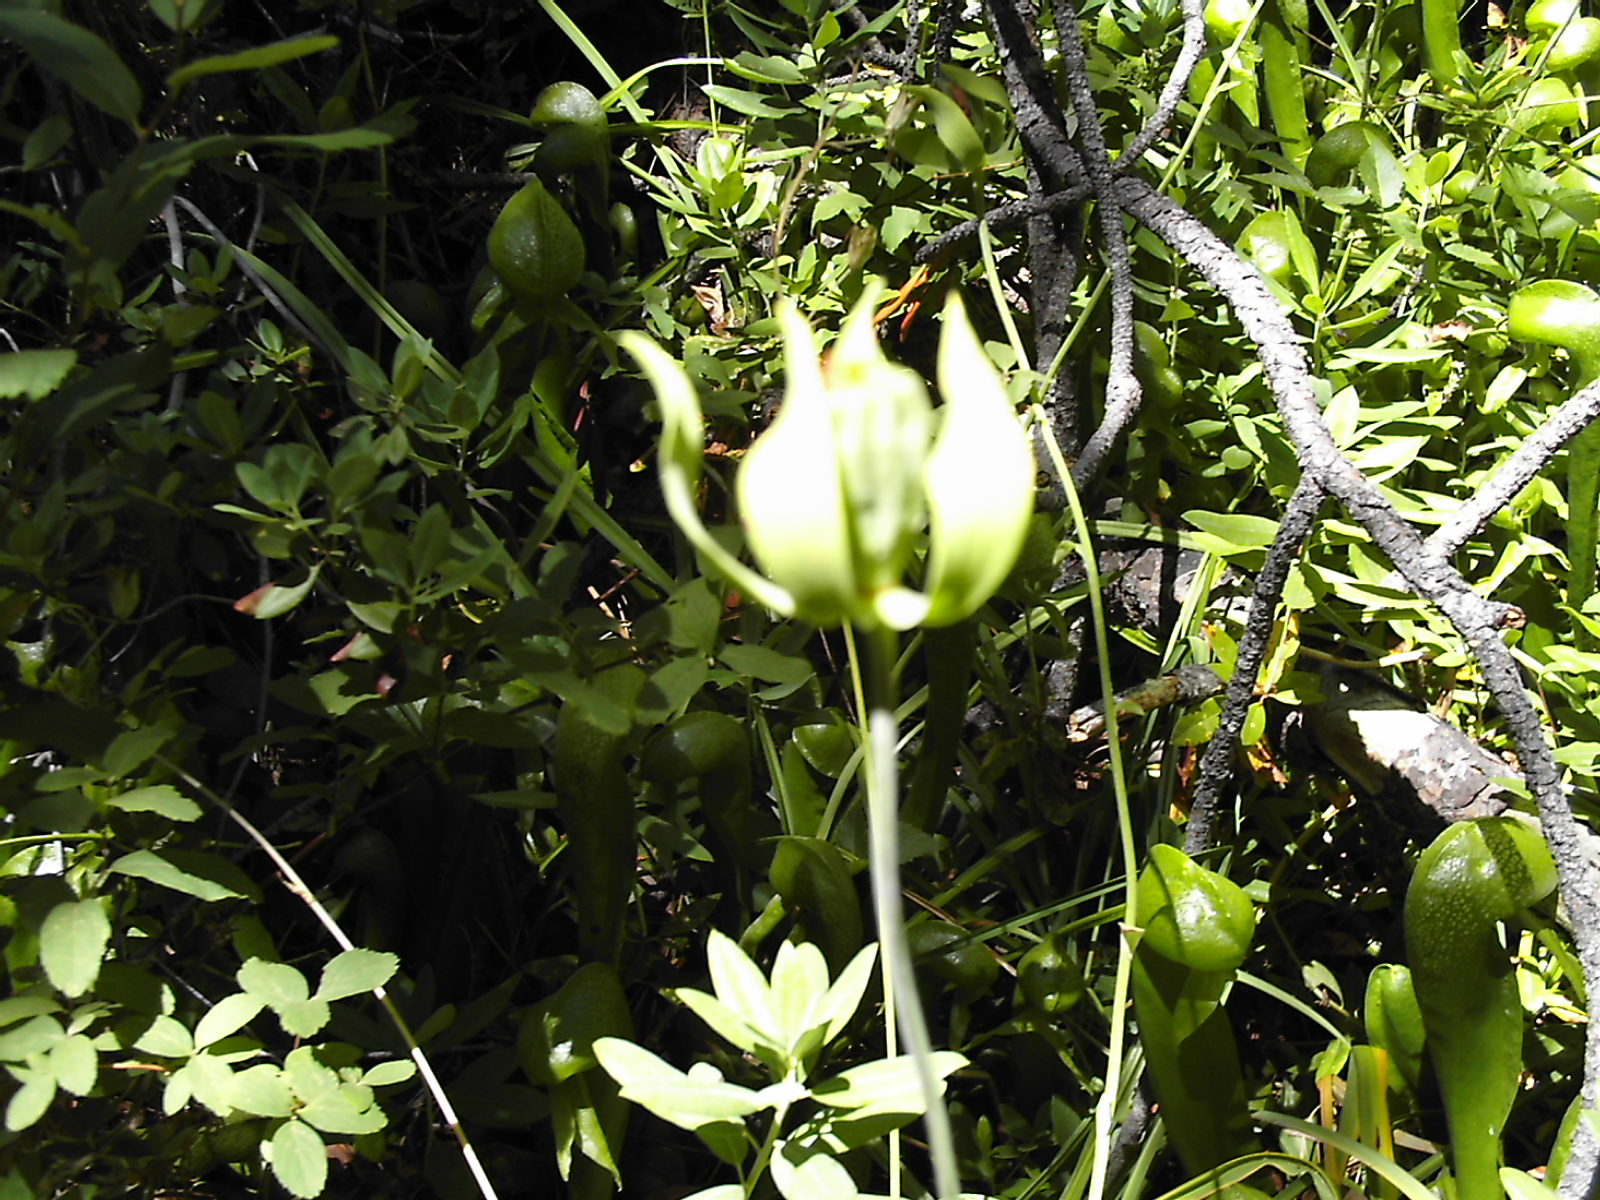 Darlingtonia flower